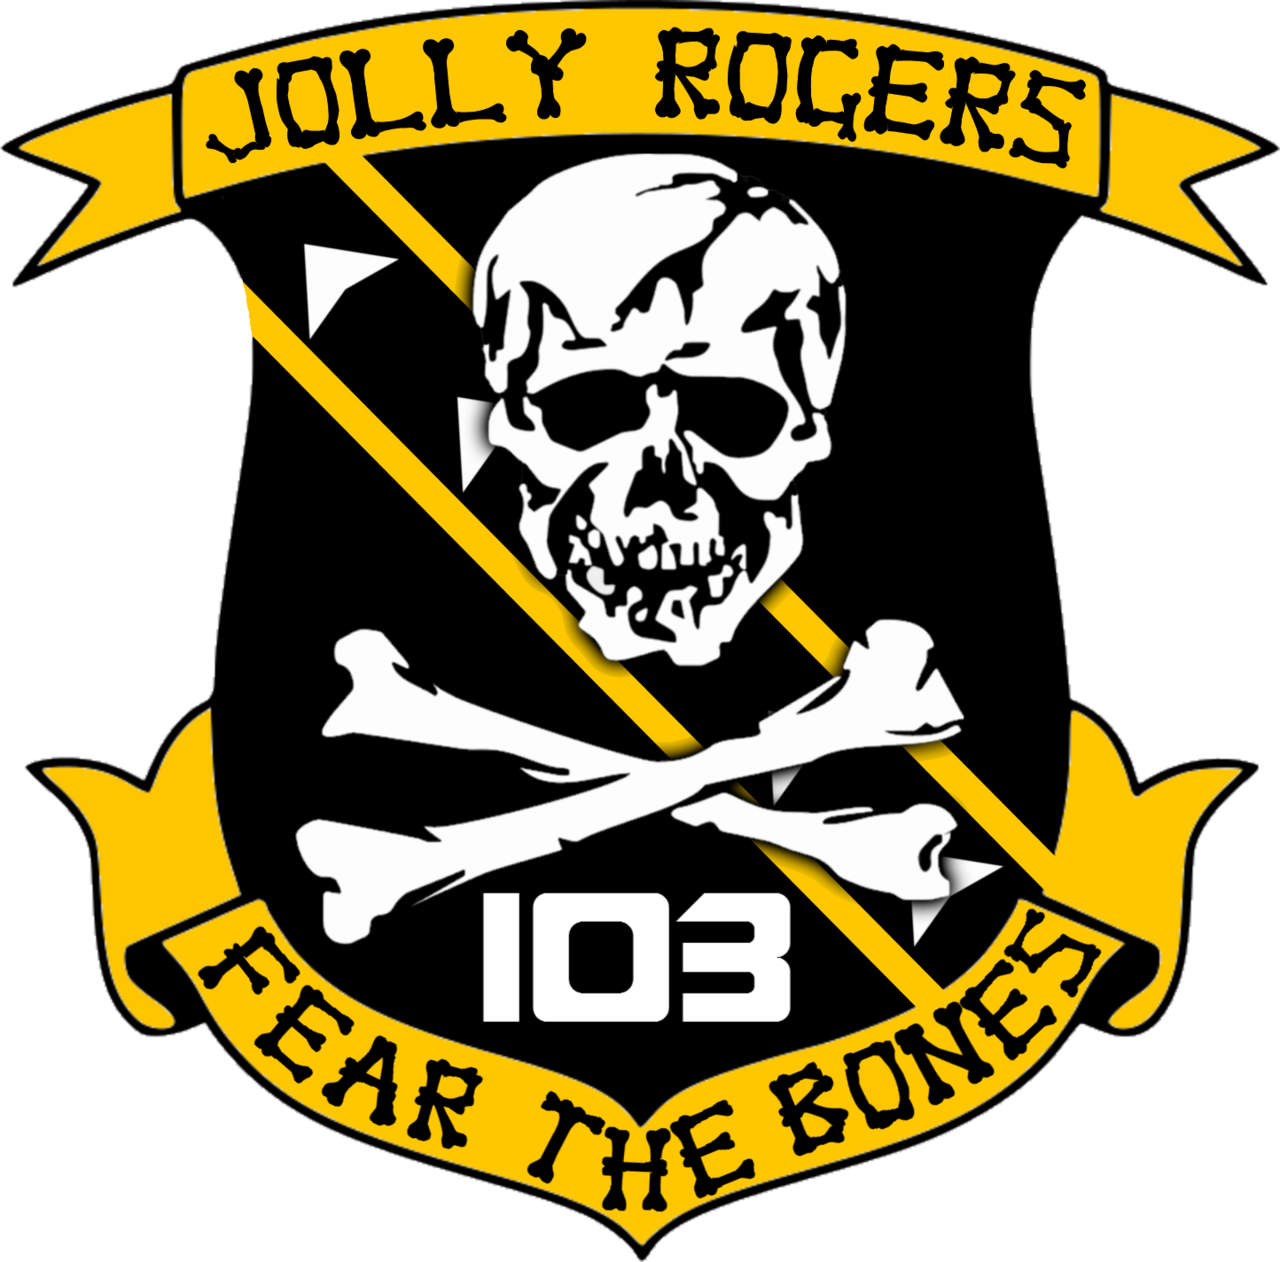 Jolly Rogers103 Fear The Bones Emblem